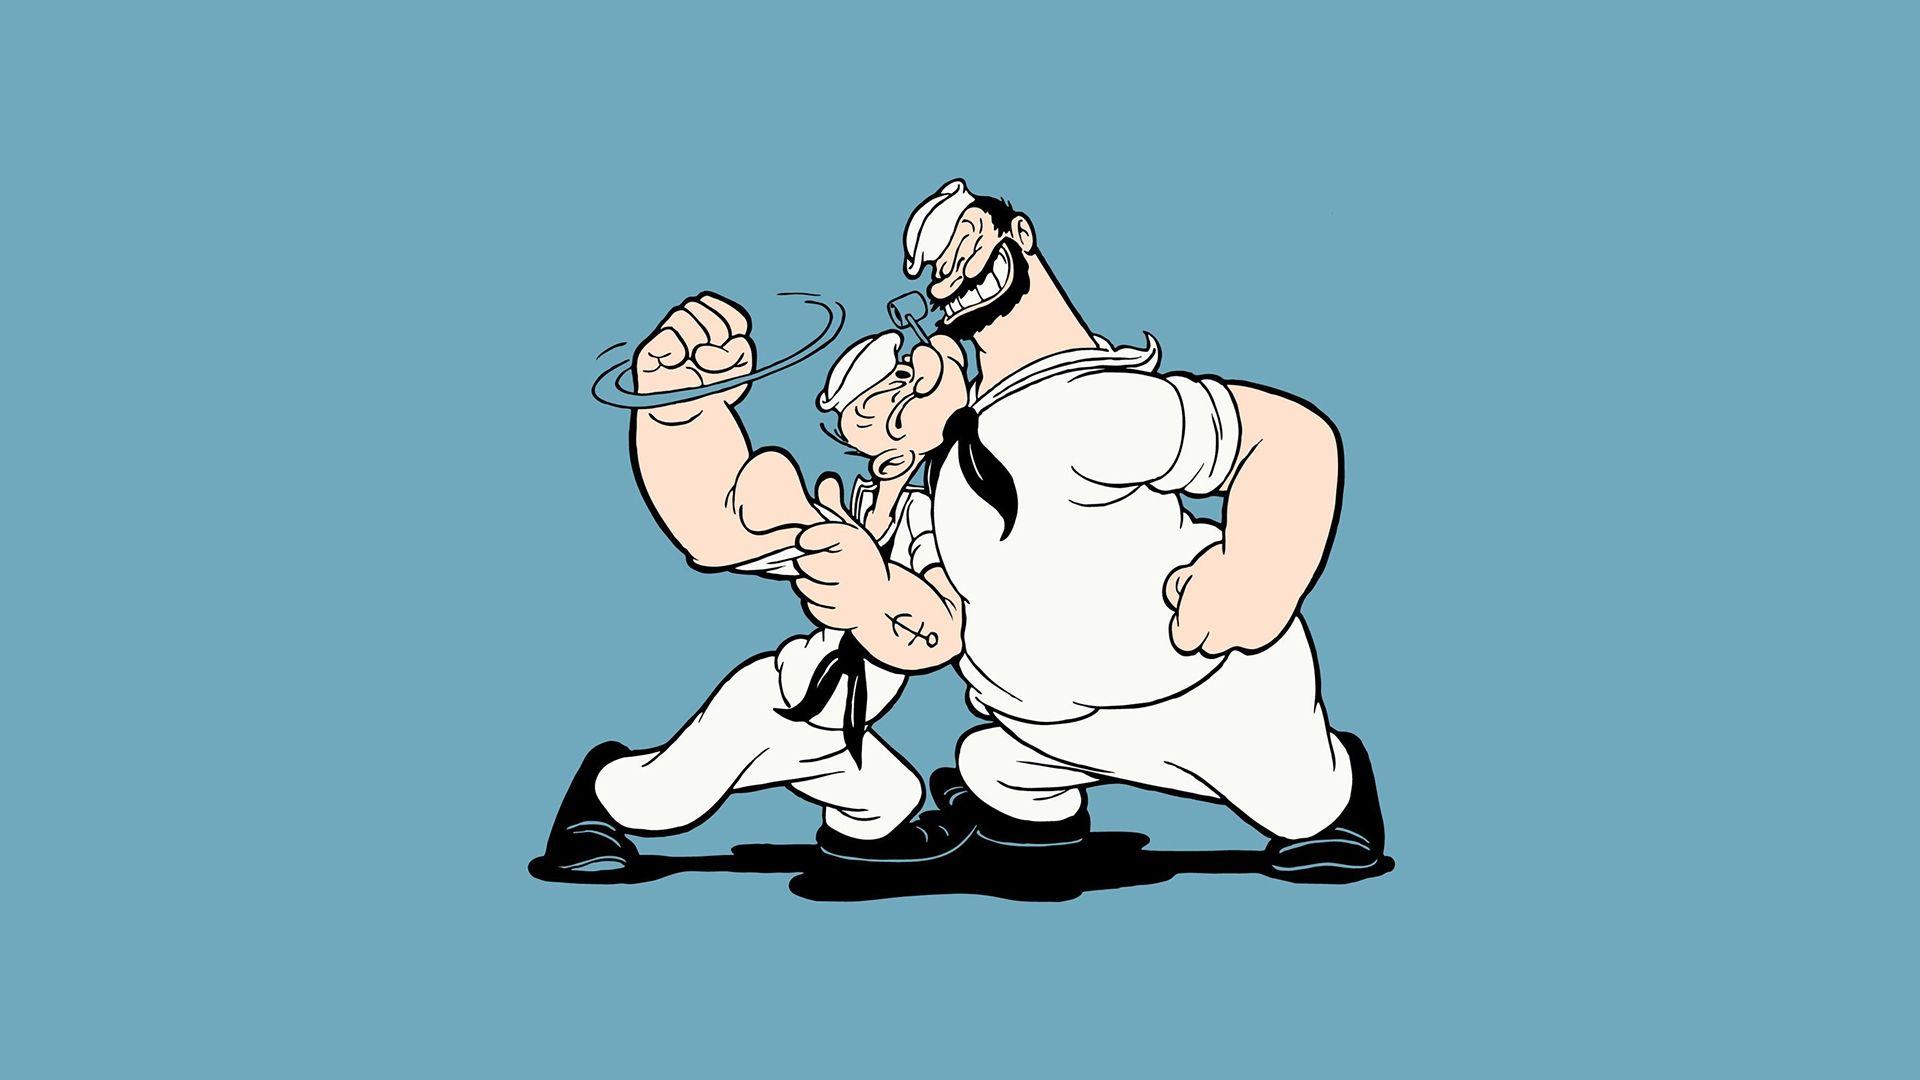 Popeye Sailor Man Full HD Wallpaper Pf Cartoon Of Mobile High